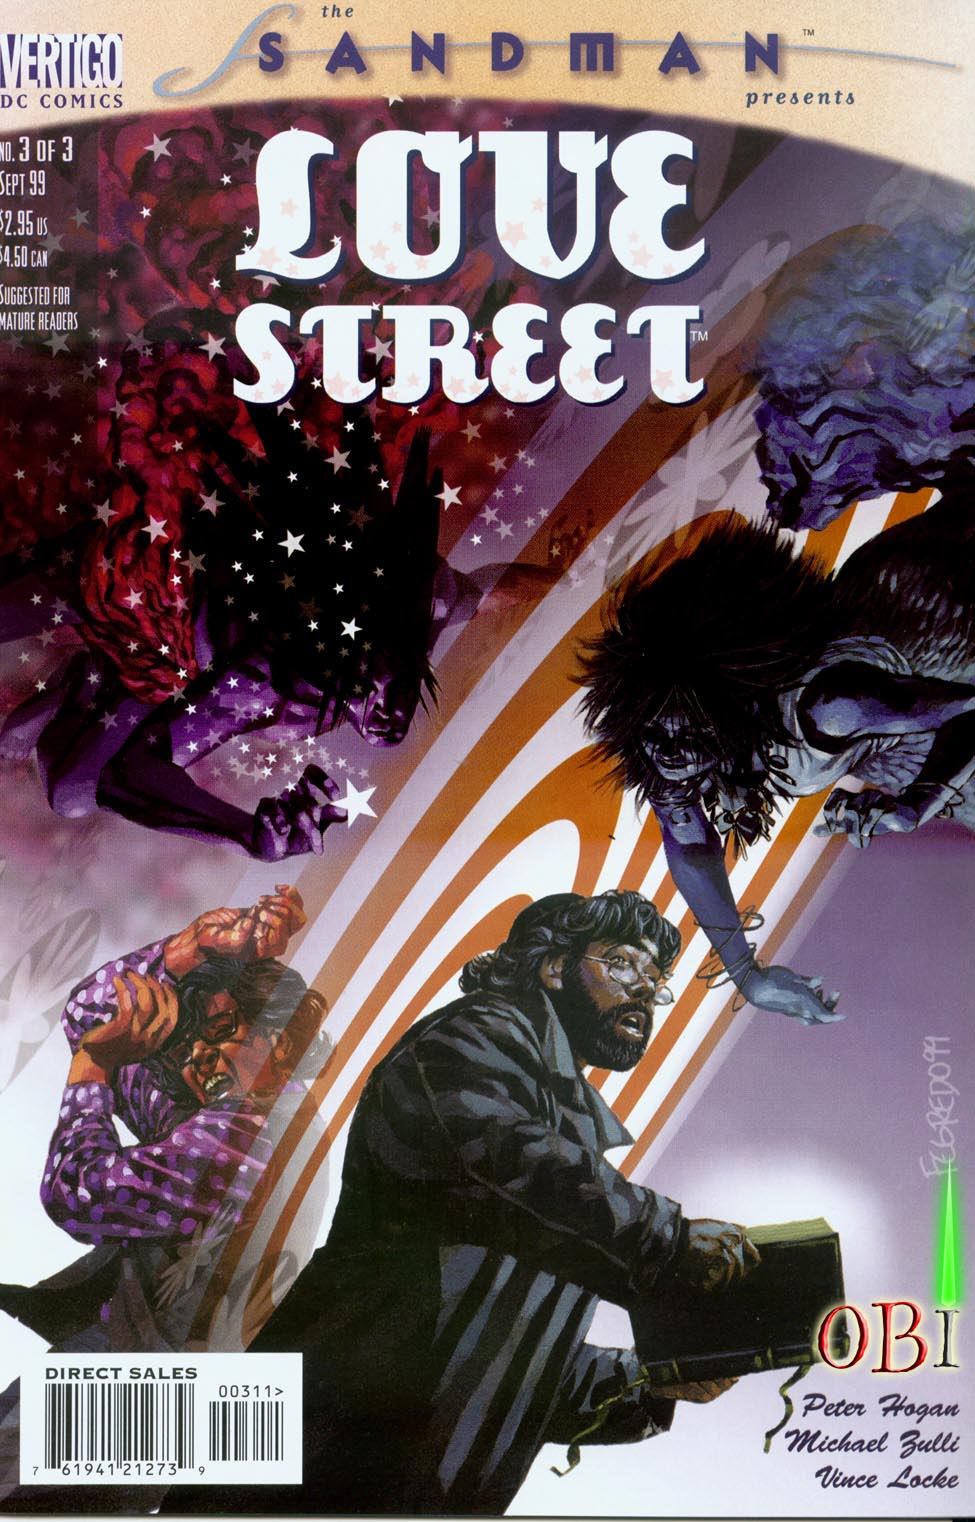 Read online The Sandman Presents: Love Street comic -  Issue #3 - 1